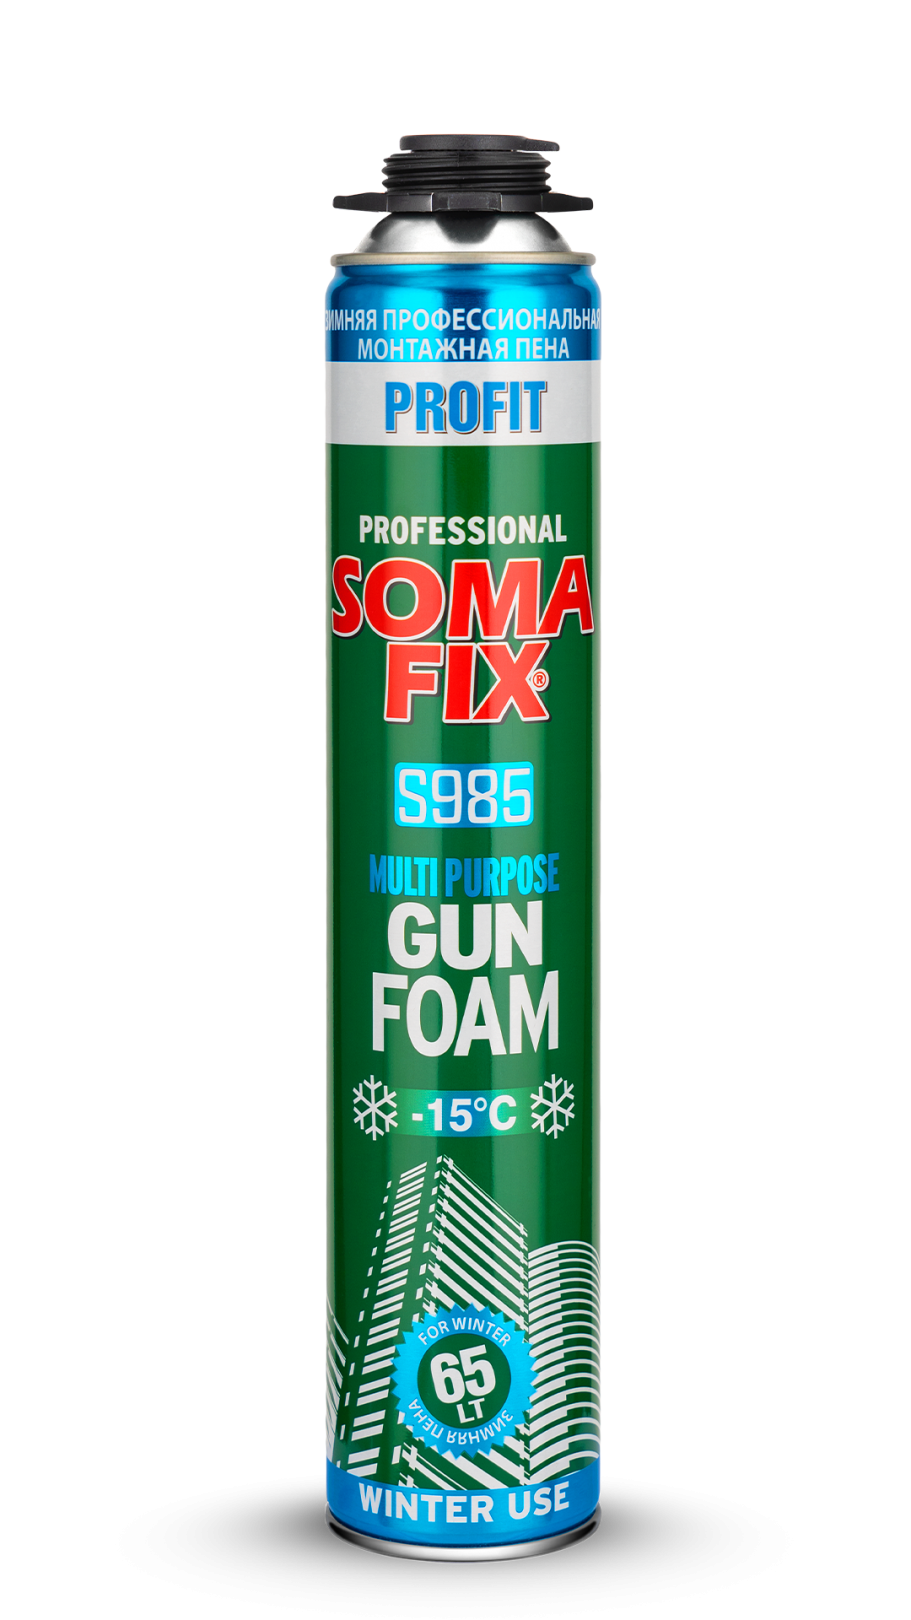 Somafix Profit Polyurethane Gun Foam Winter Use S985